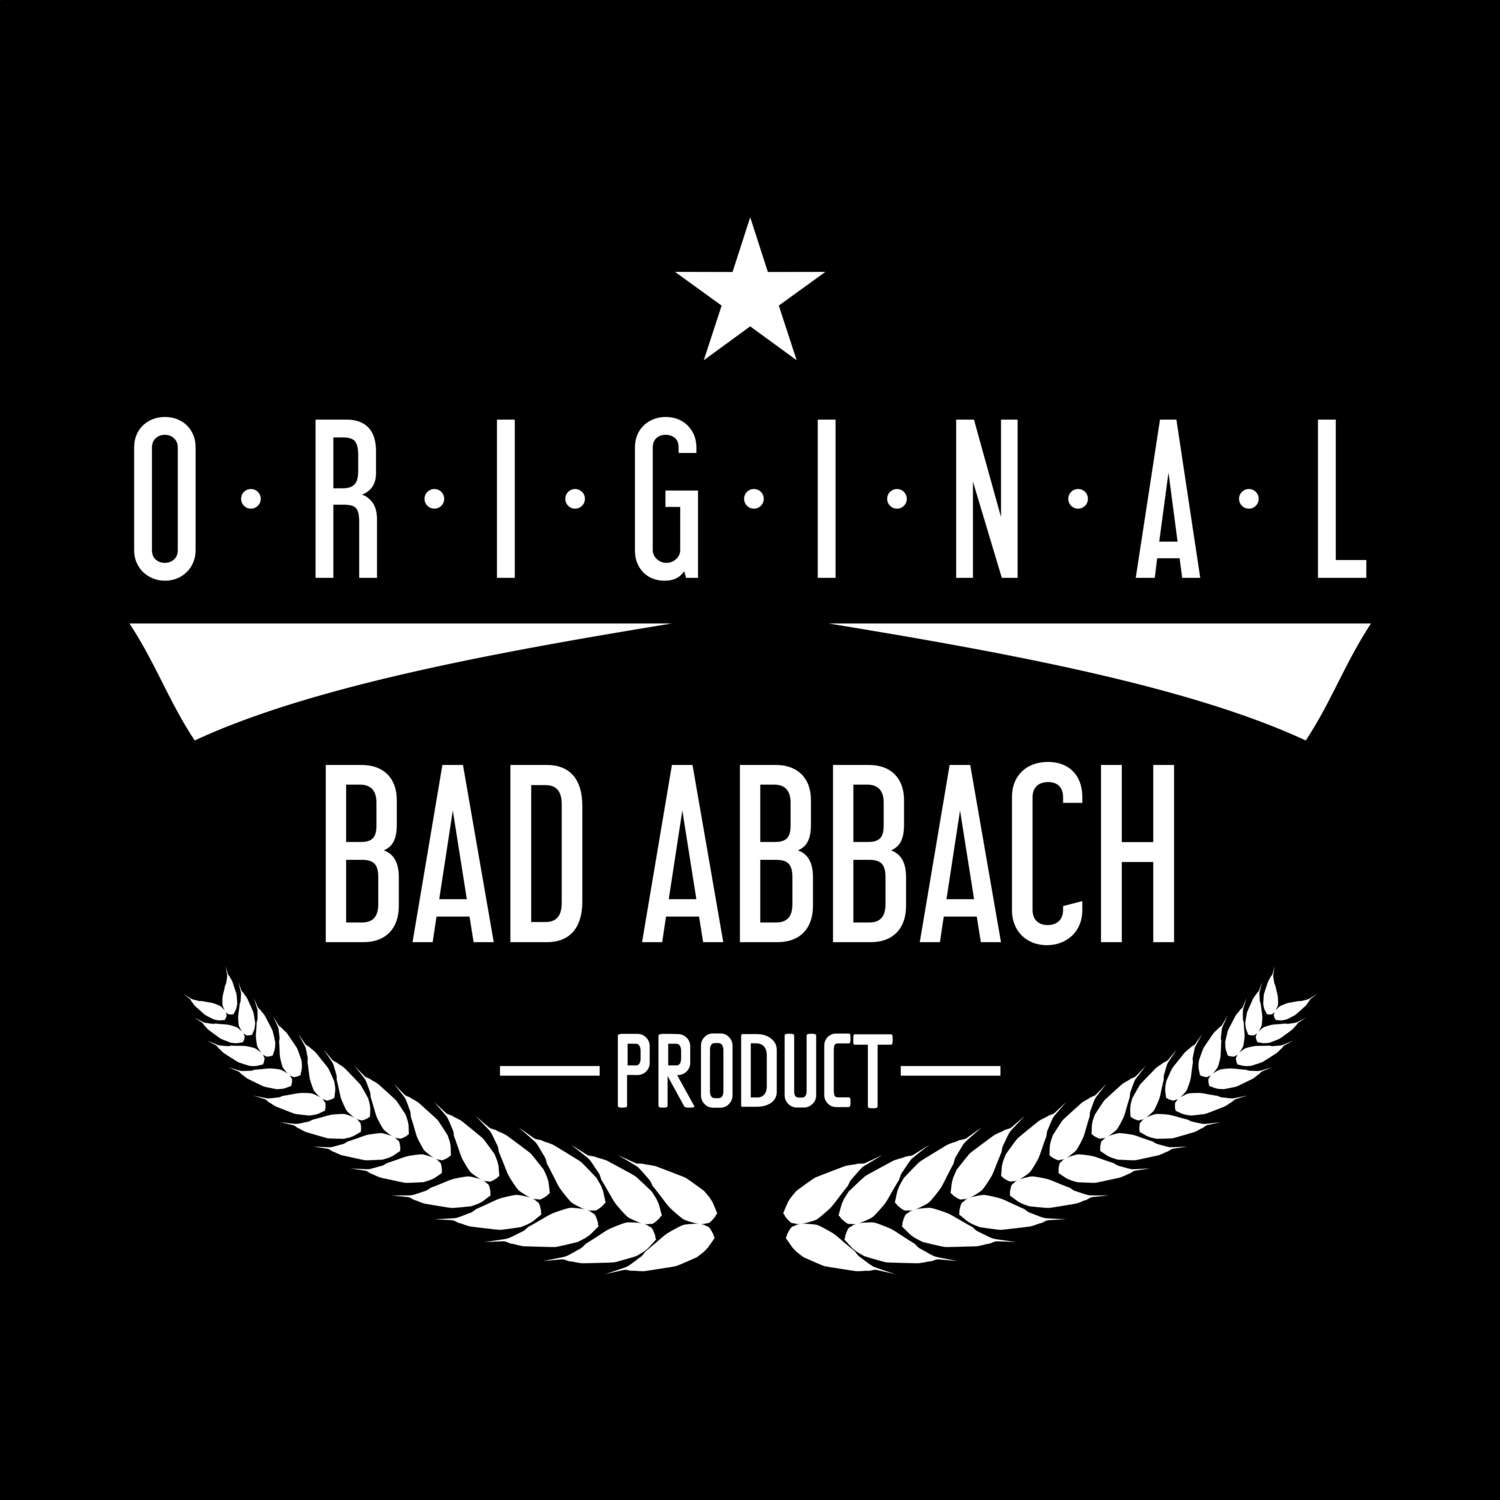 Bad Abbach T-Shirt »Original Product«